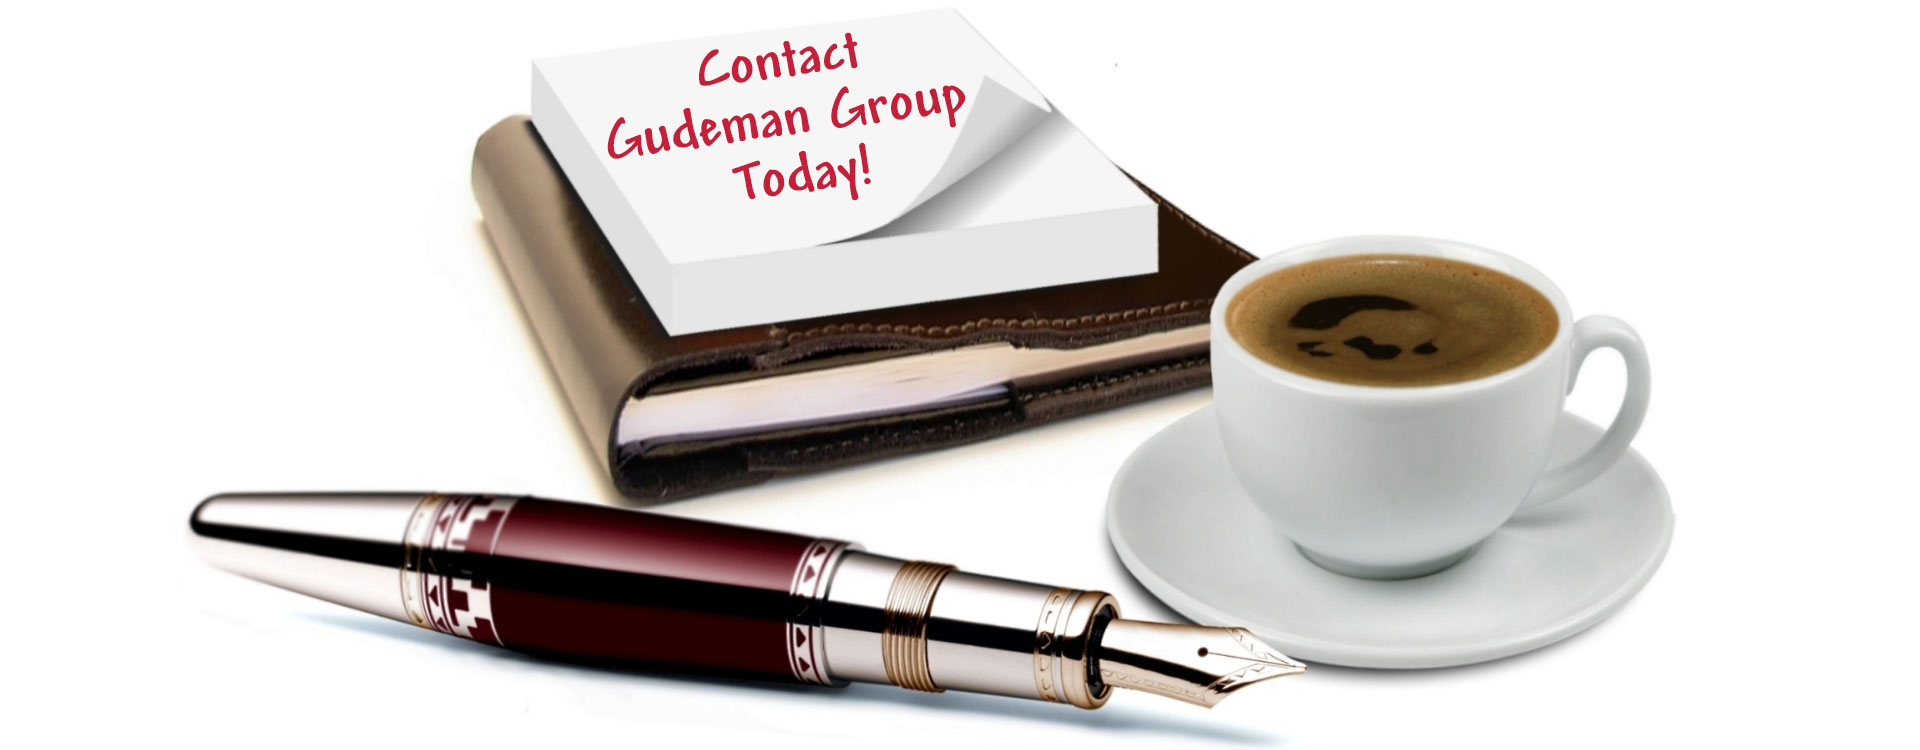 Contact Gudeman Group